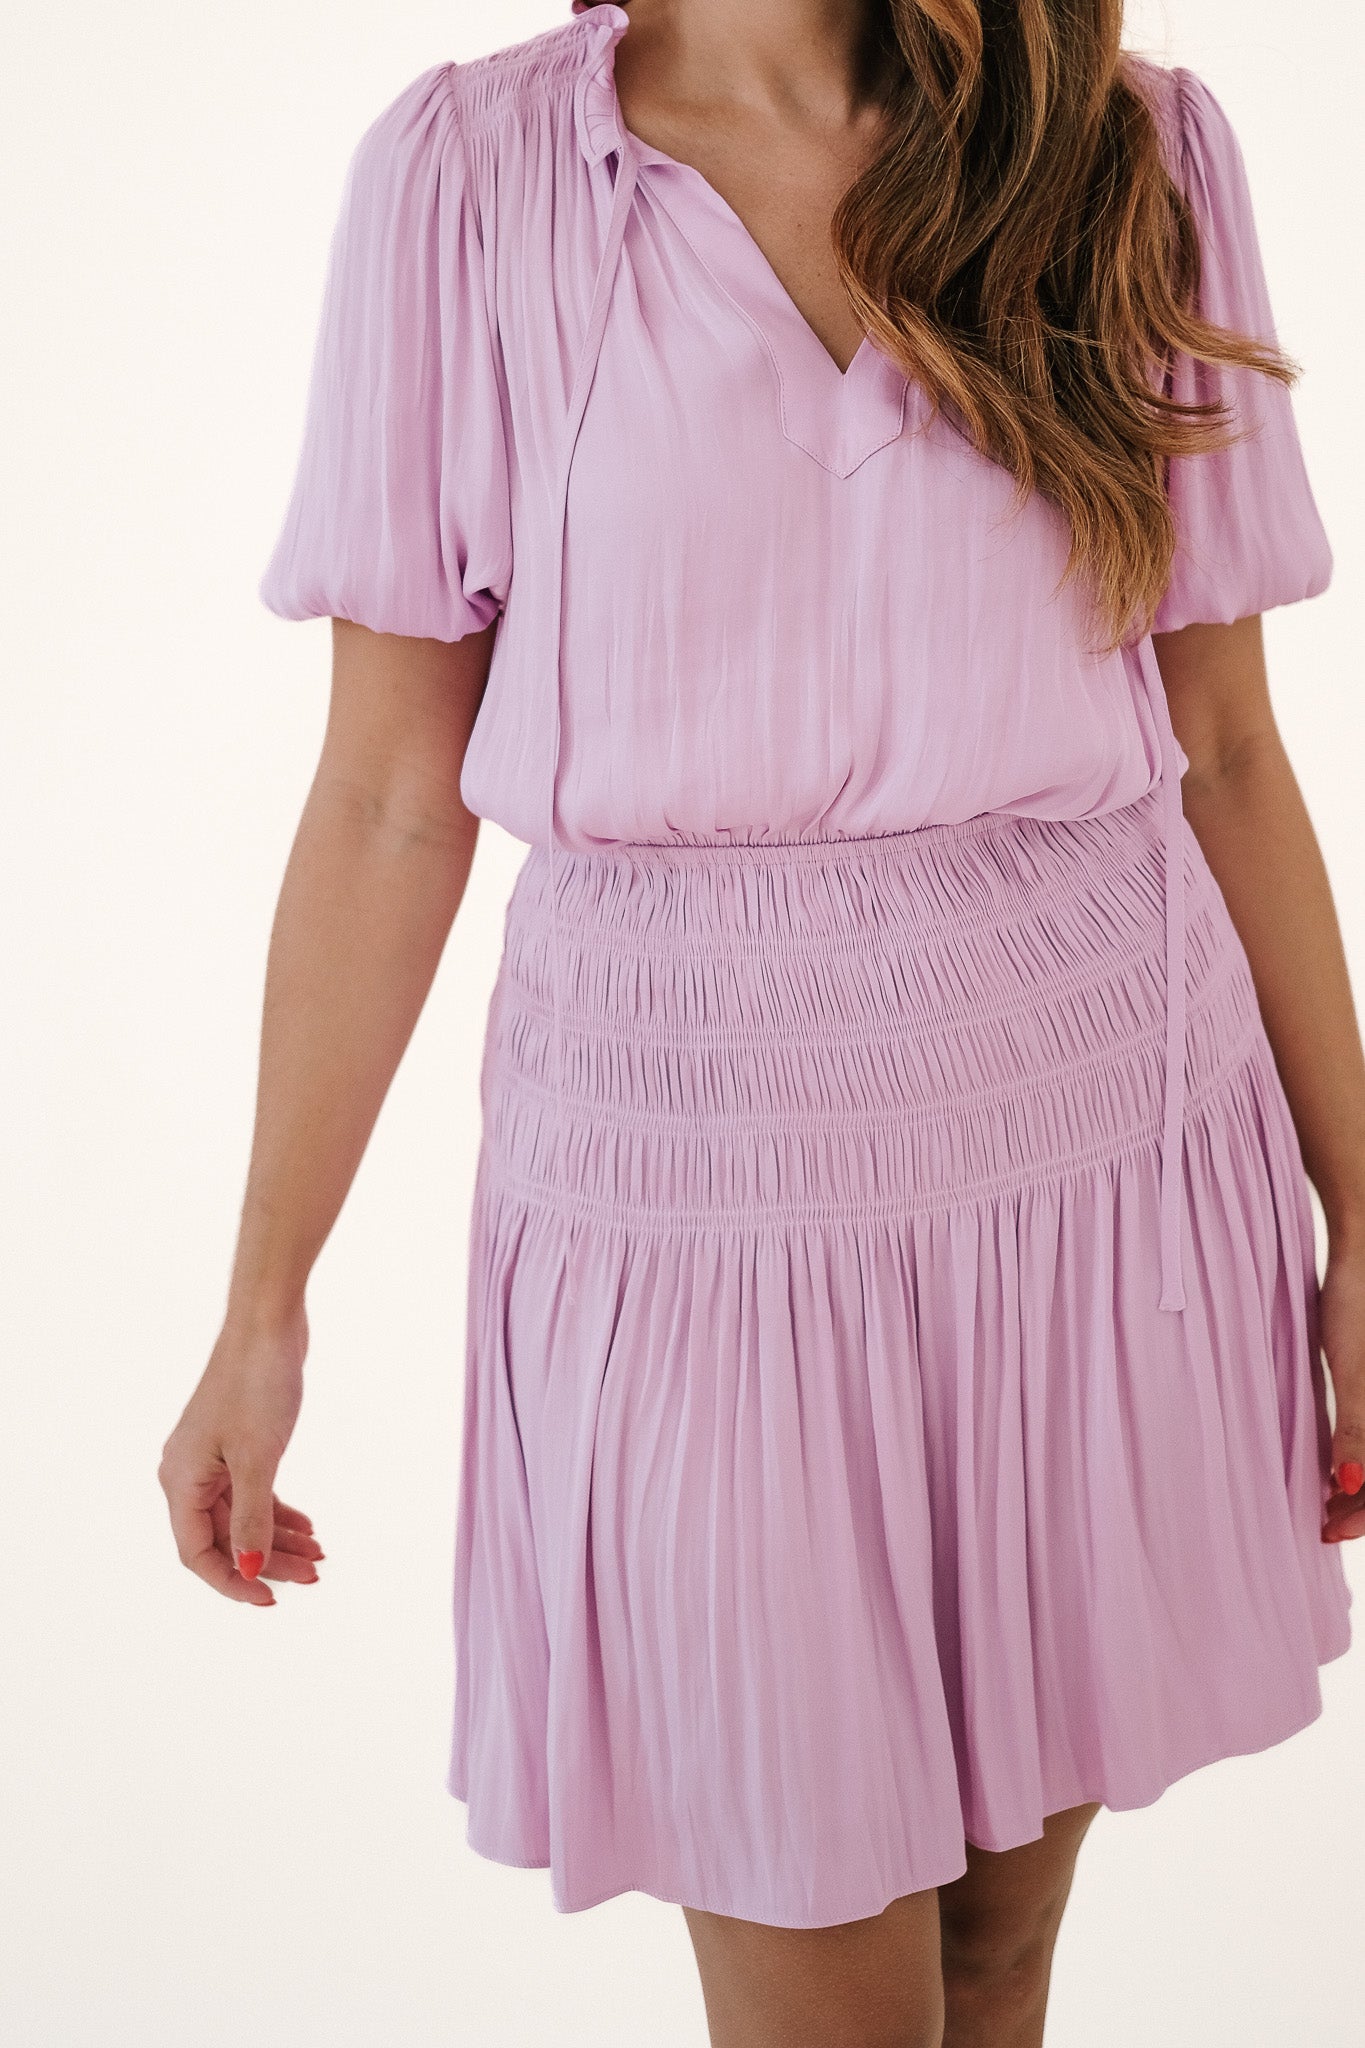 Current Air Beulah Short Sleeve Smocked Mini Dress (Lavender)